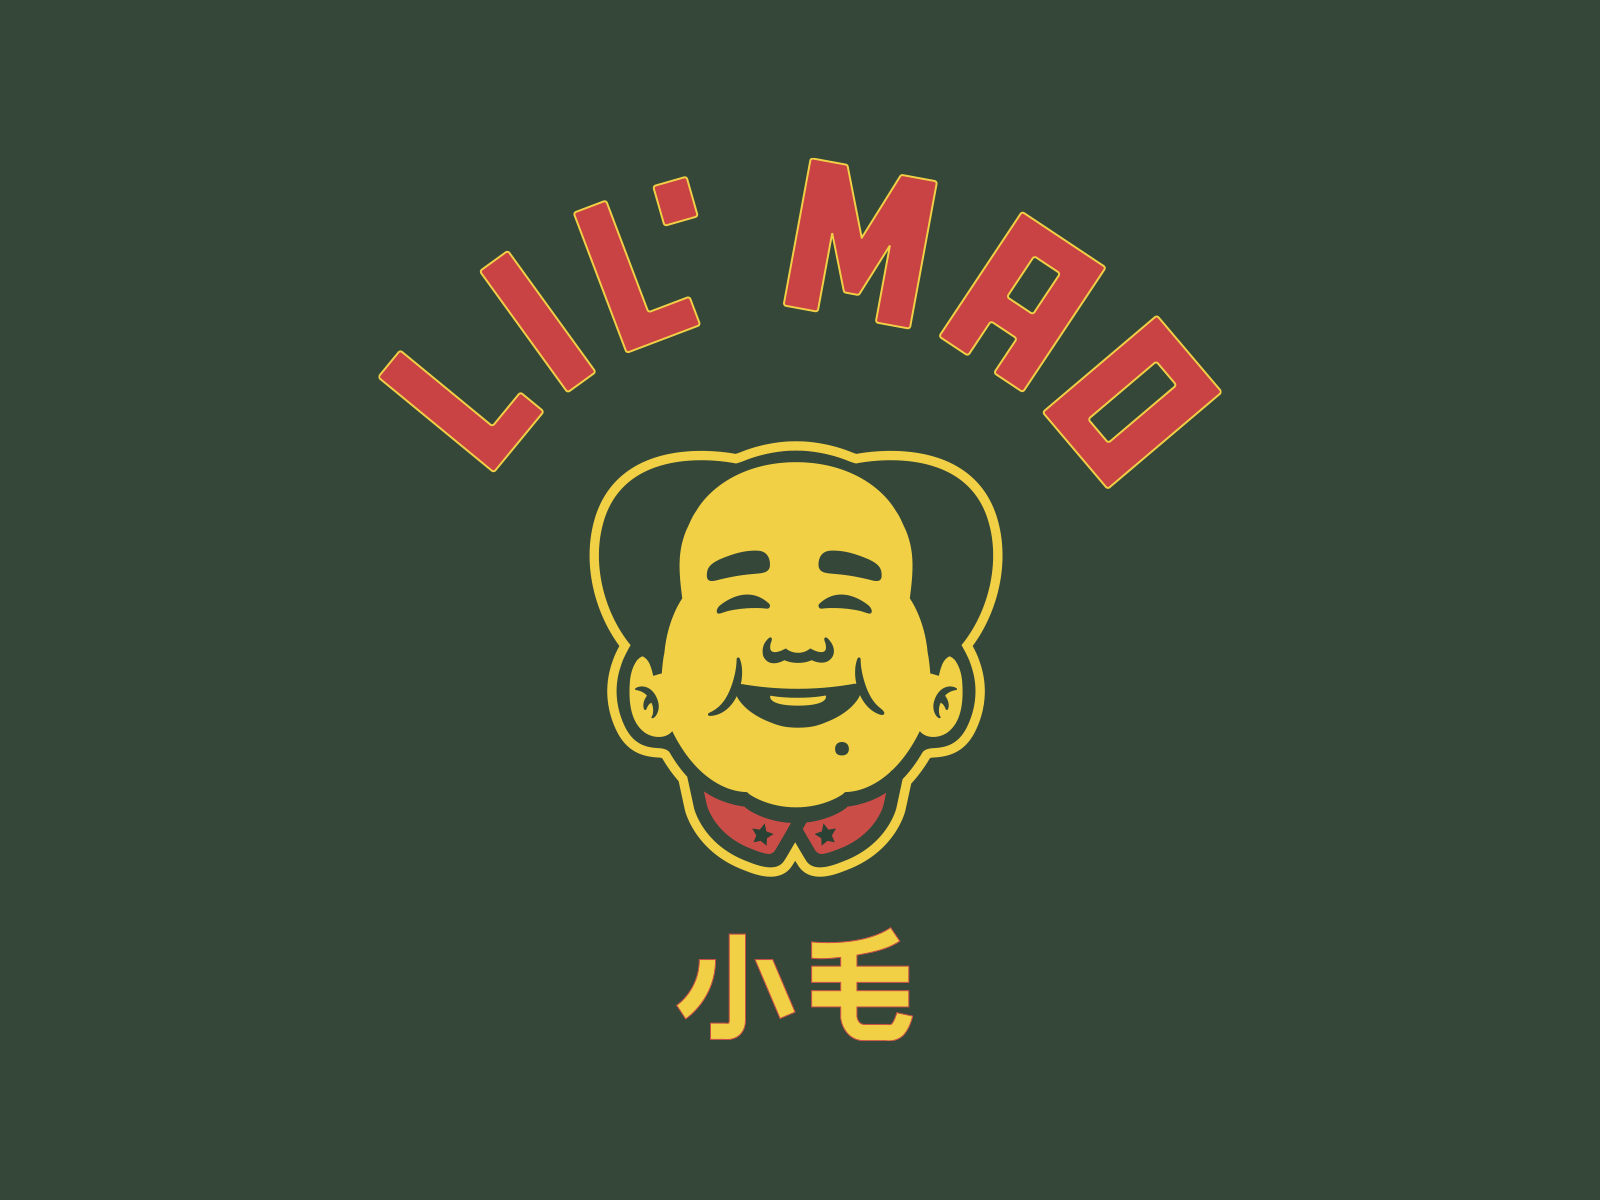 Lil' Mao Logo by Marko Gole on Dribbble